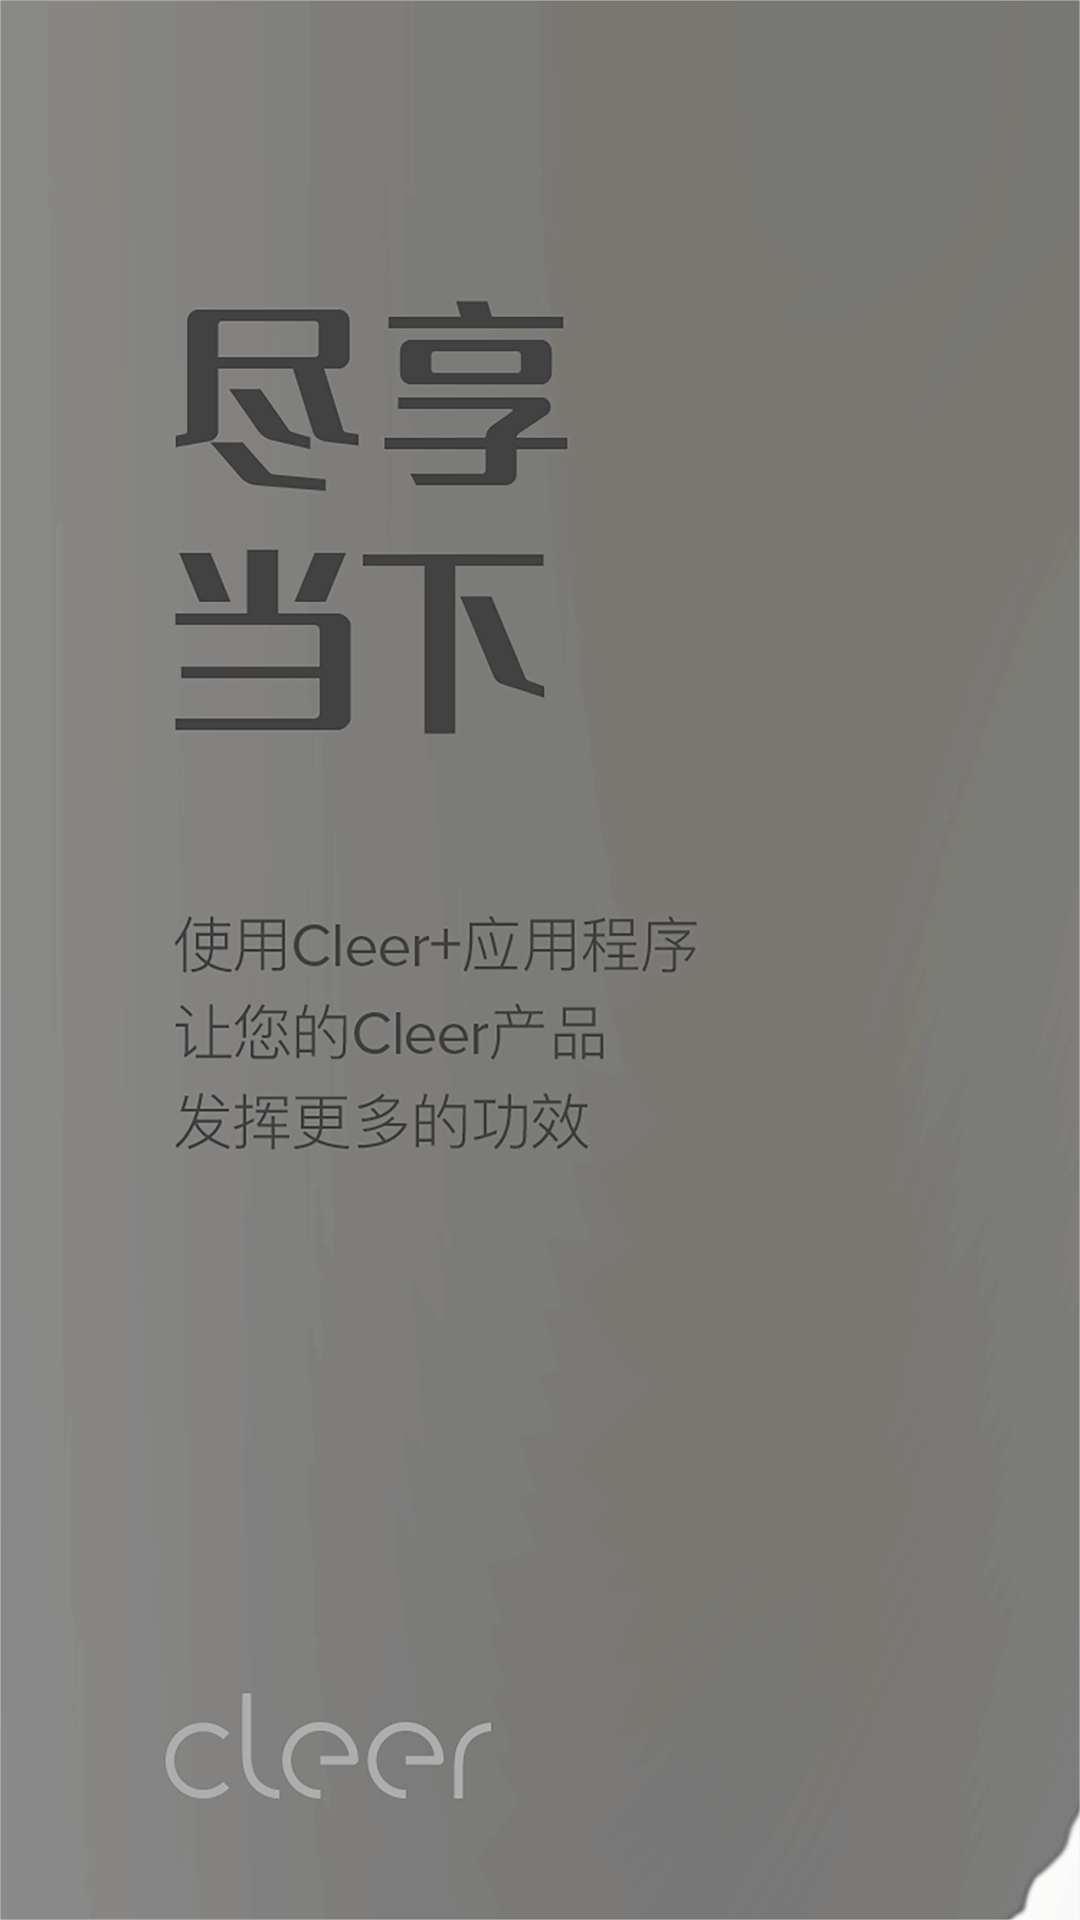 Cleer蓝牙耳机appv2.0.7